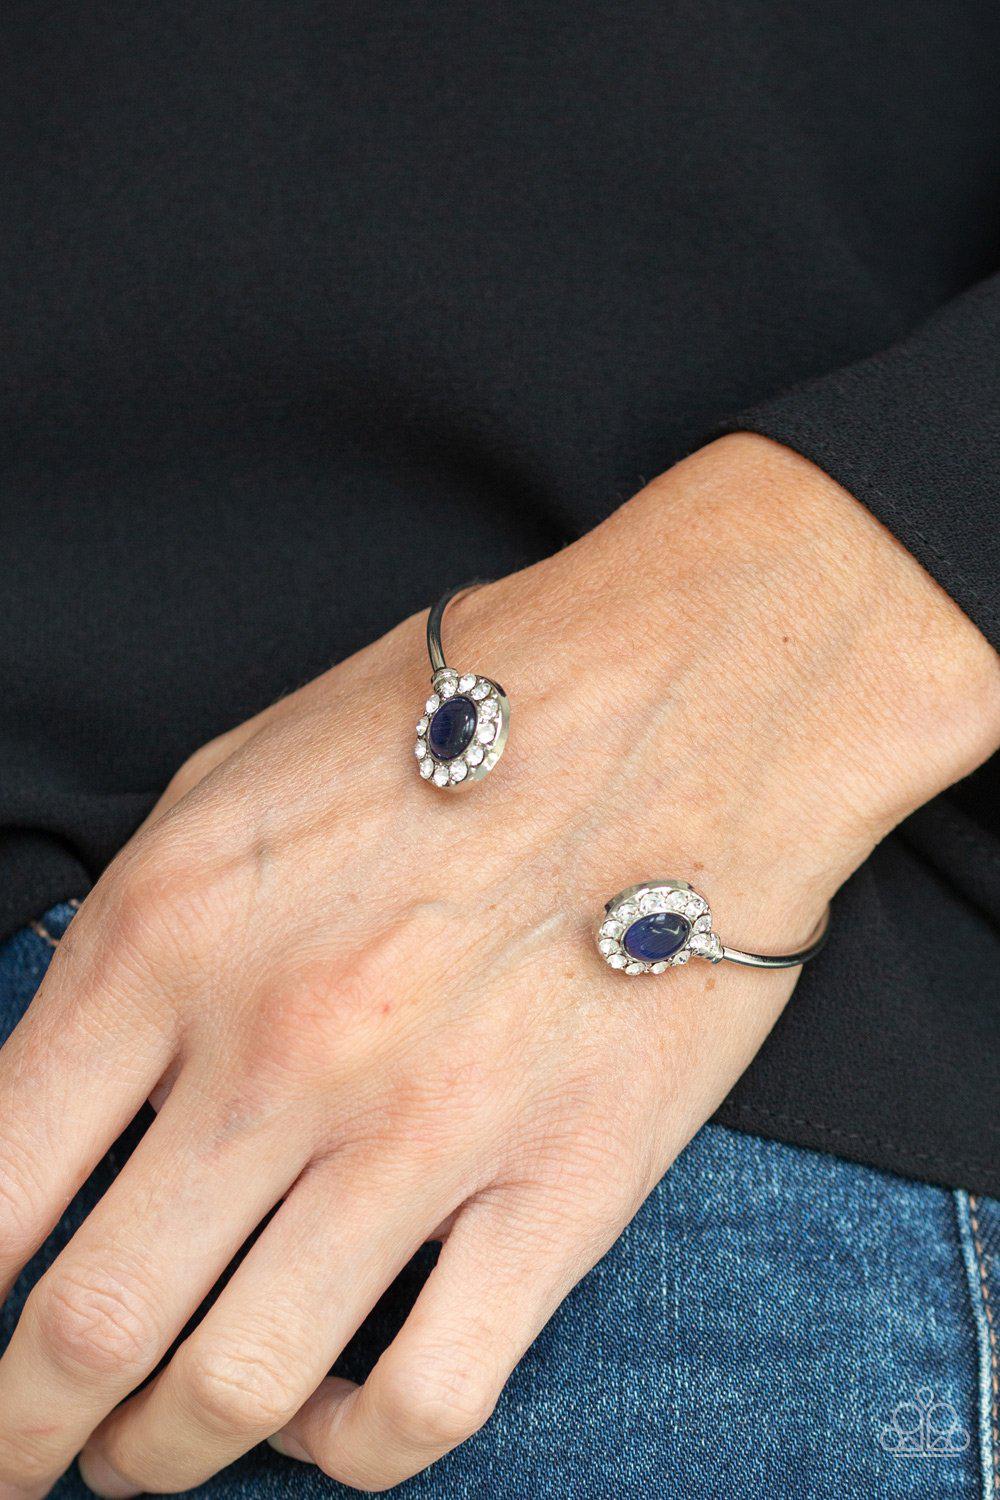 Instant Illumination Blue Cat's Eye Stone Cuff Bracelet - Paparazzi Accessories-CarasShop.com - $5 Jewelry by Cara Jewels